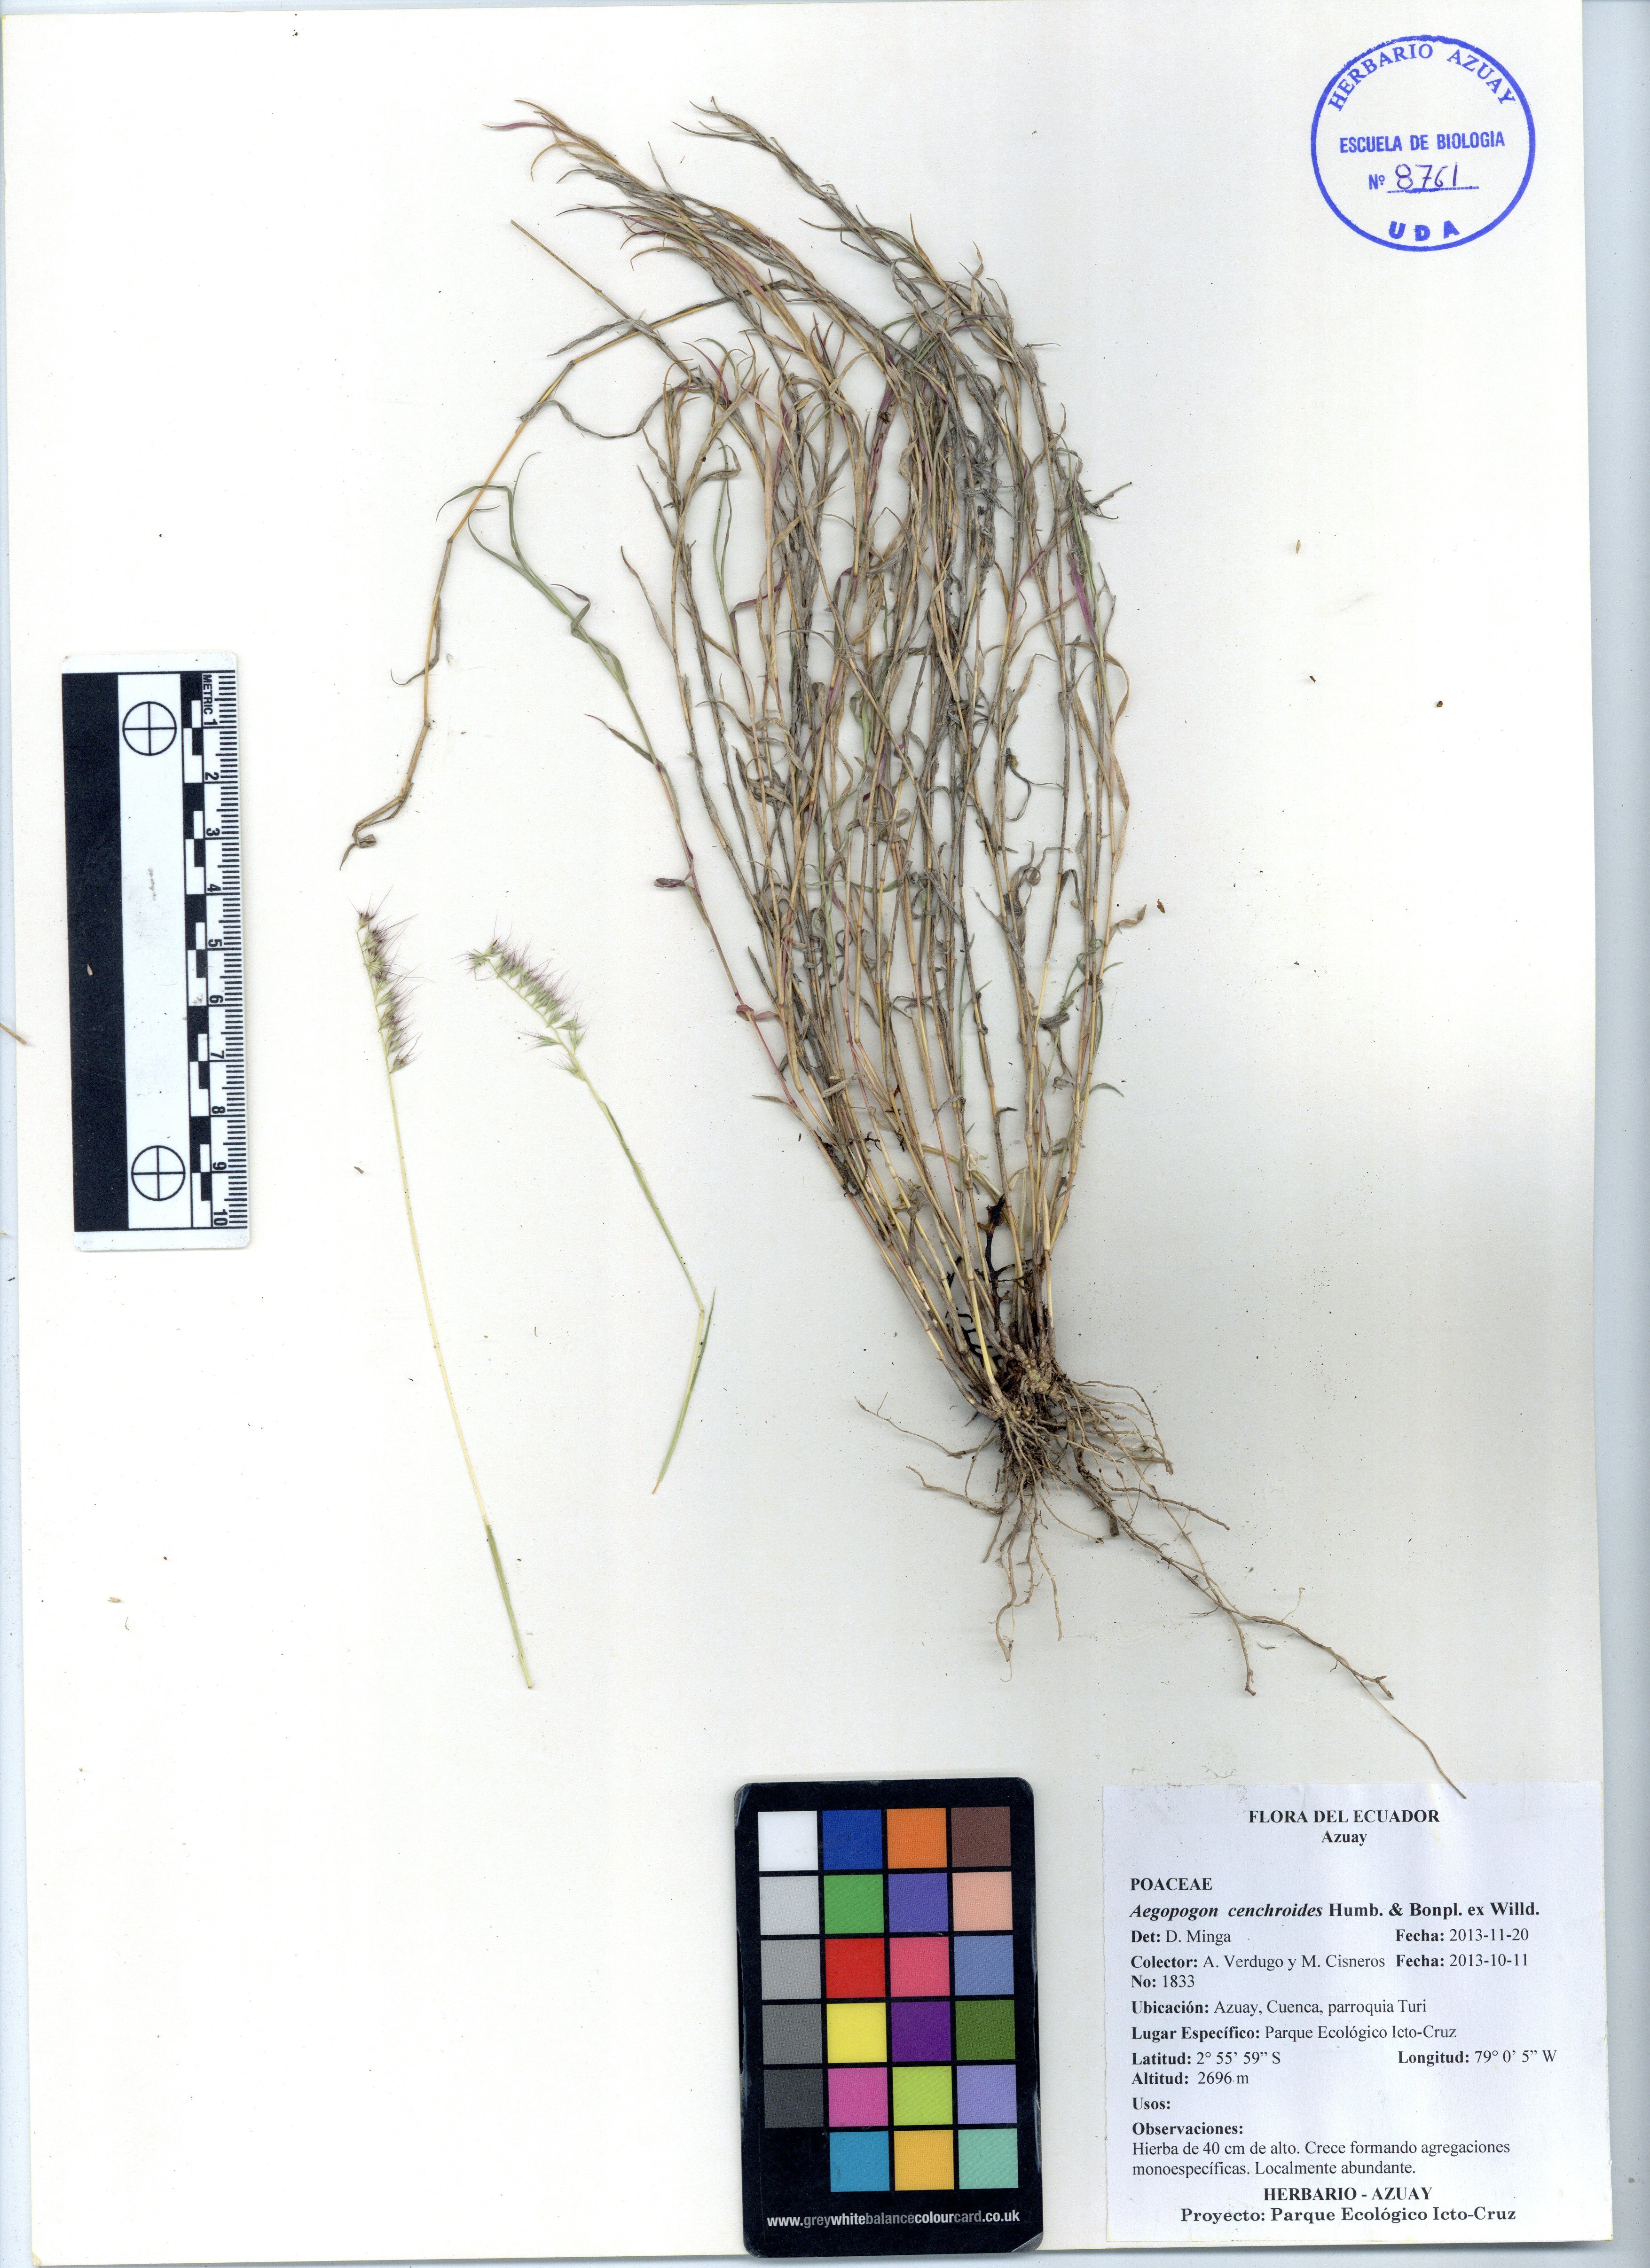 Aegopogon cenchroides Humb. & Bonpl. ex Willd.